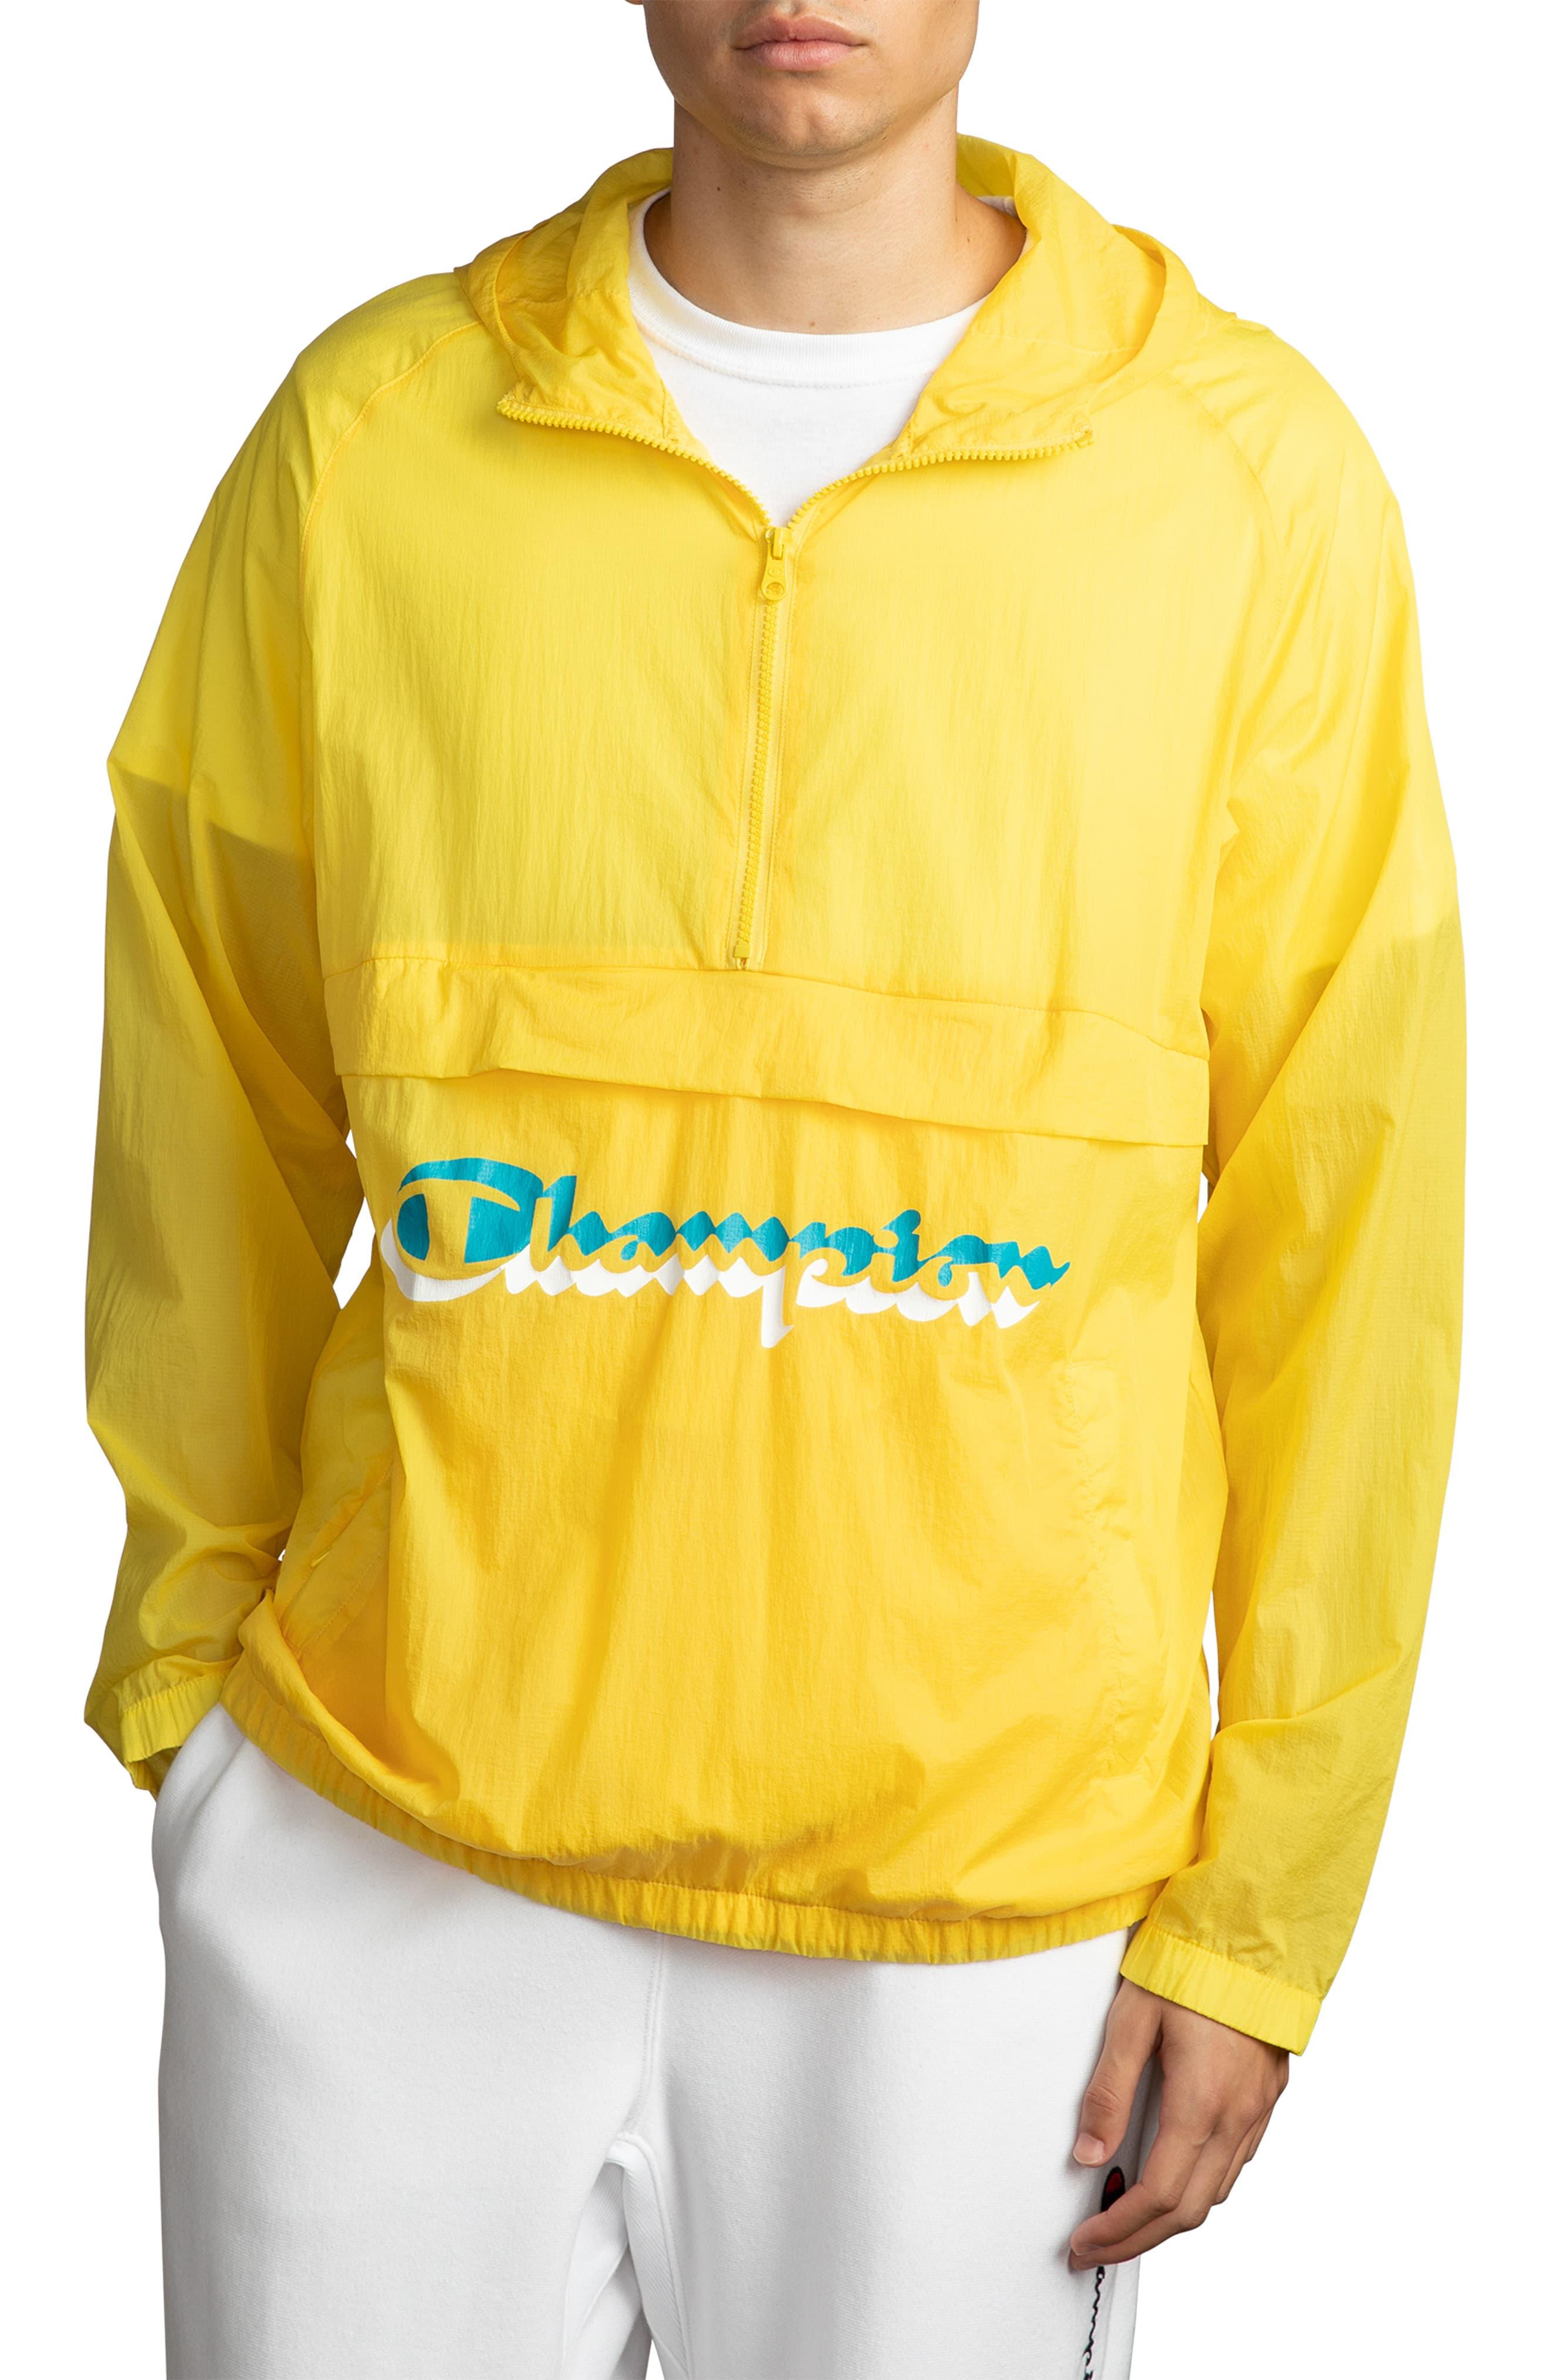 yellow champion rain jacket